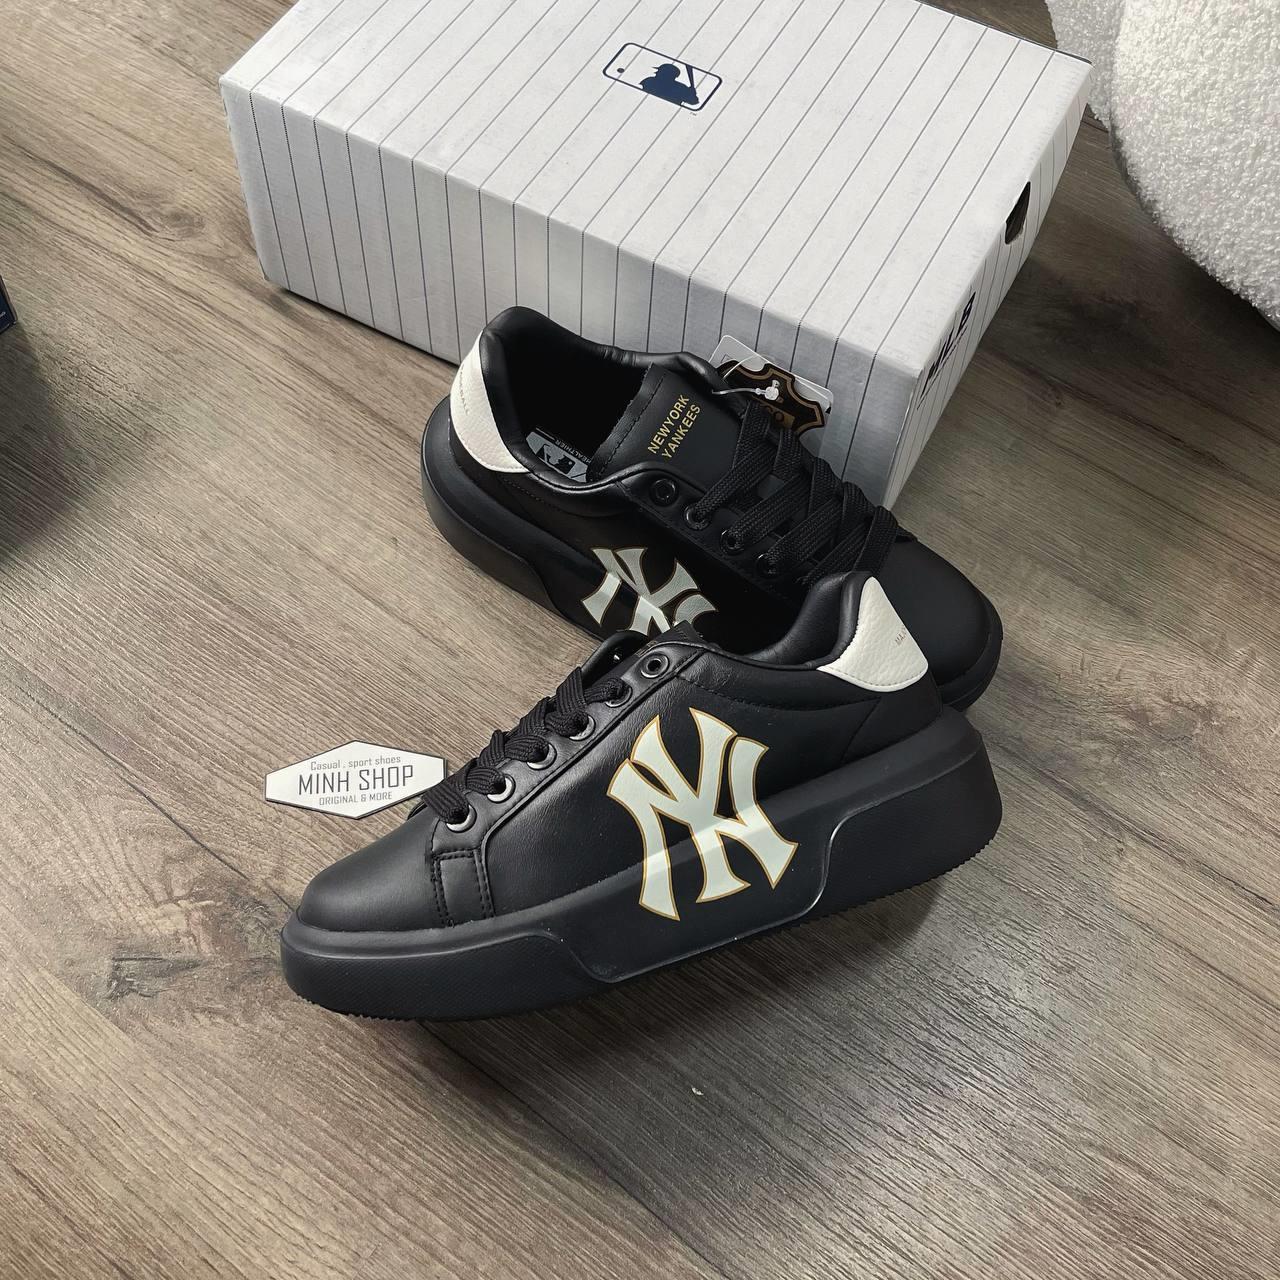 MLB Chunky Classic New York Yankees Shoes Sneakers Black 3ASXXA11N-50BKS US  5-11